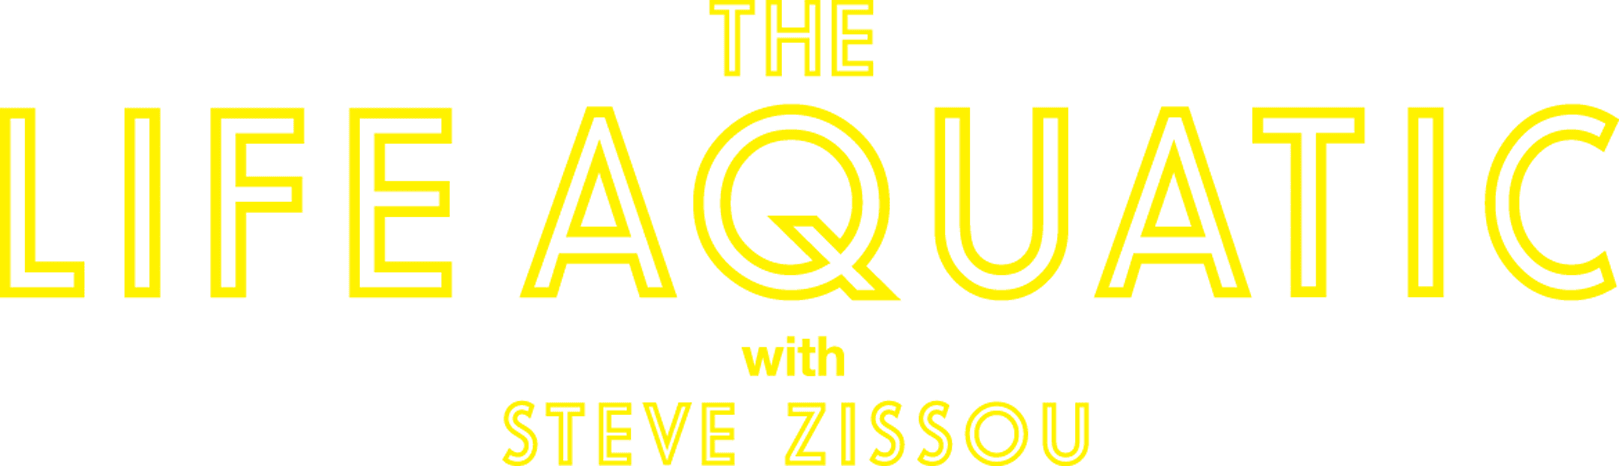 The Life Aquatic with Steve Zissou logo